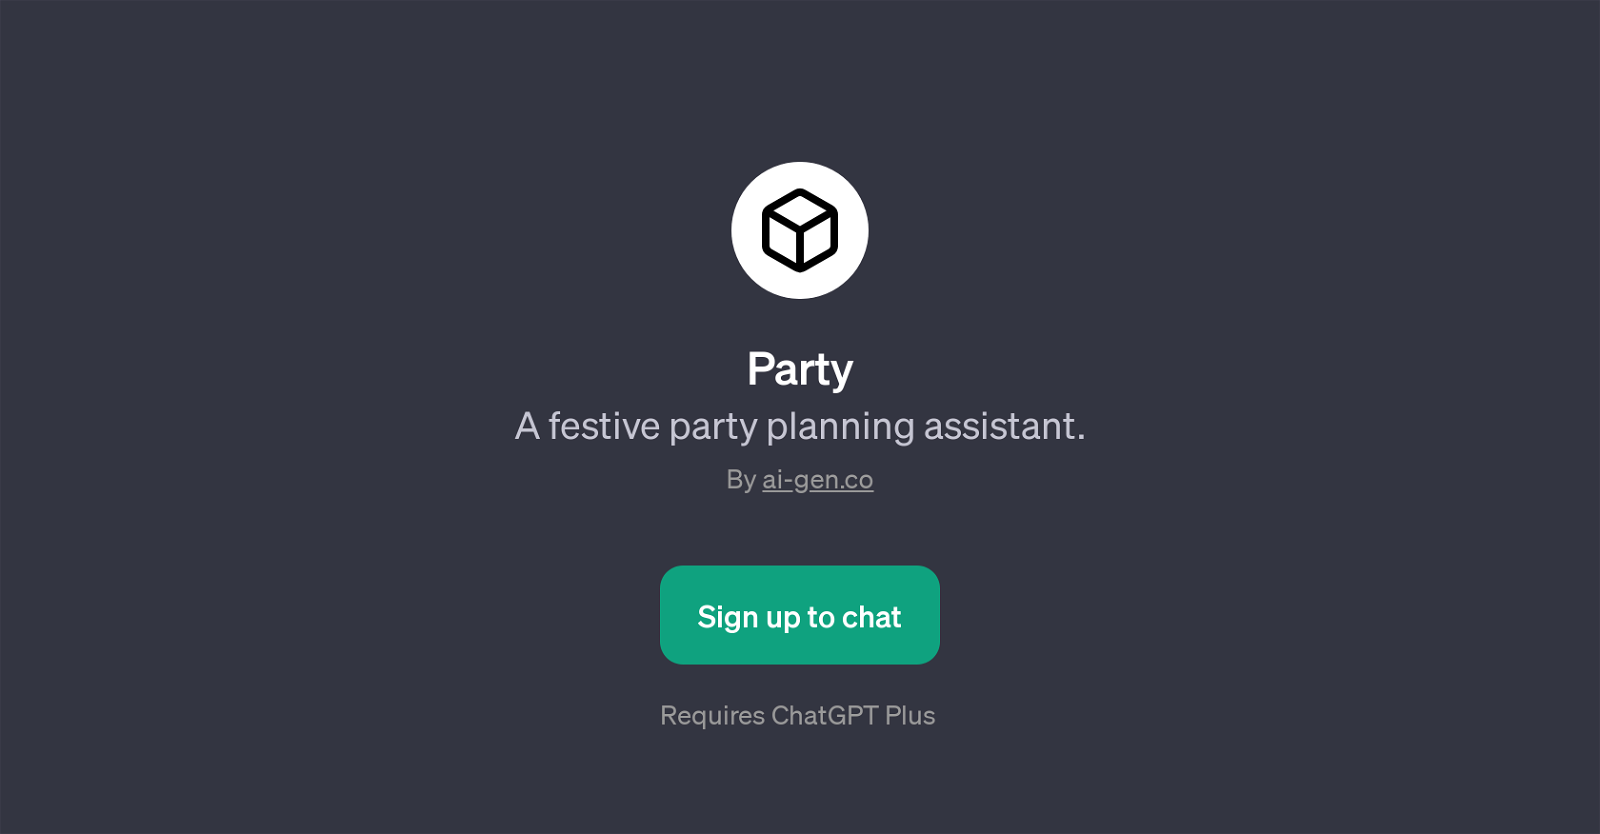 Party website